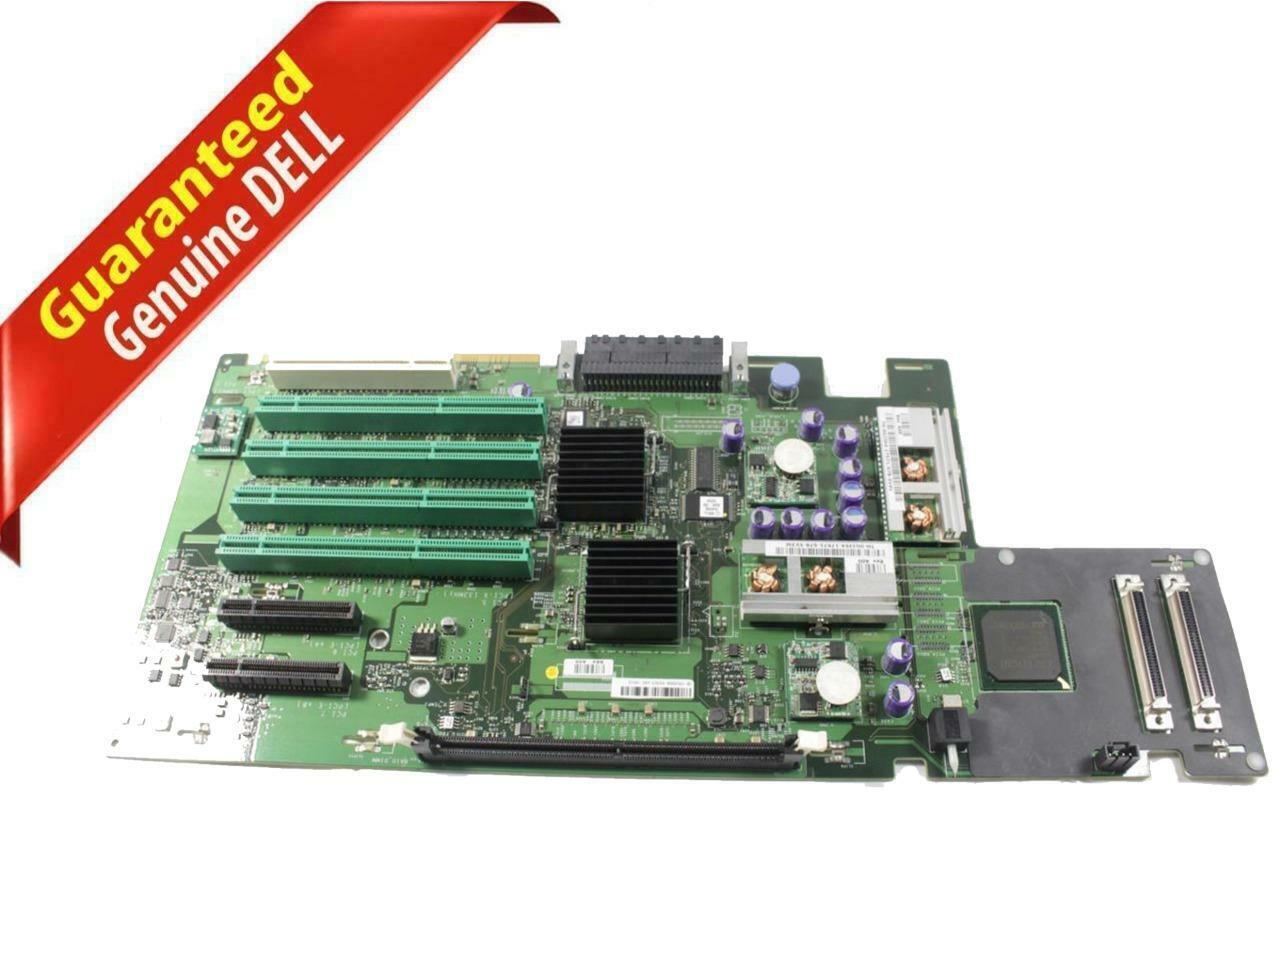 New Genuine Dell PowerEdge 2800 PCI-E PCI-X Riser Board Assembly V6 NJ004 0NJ004